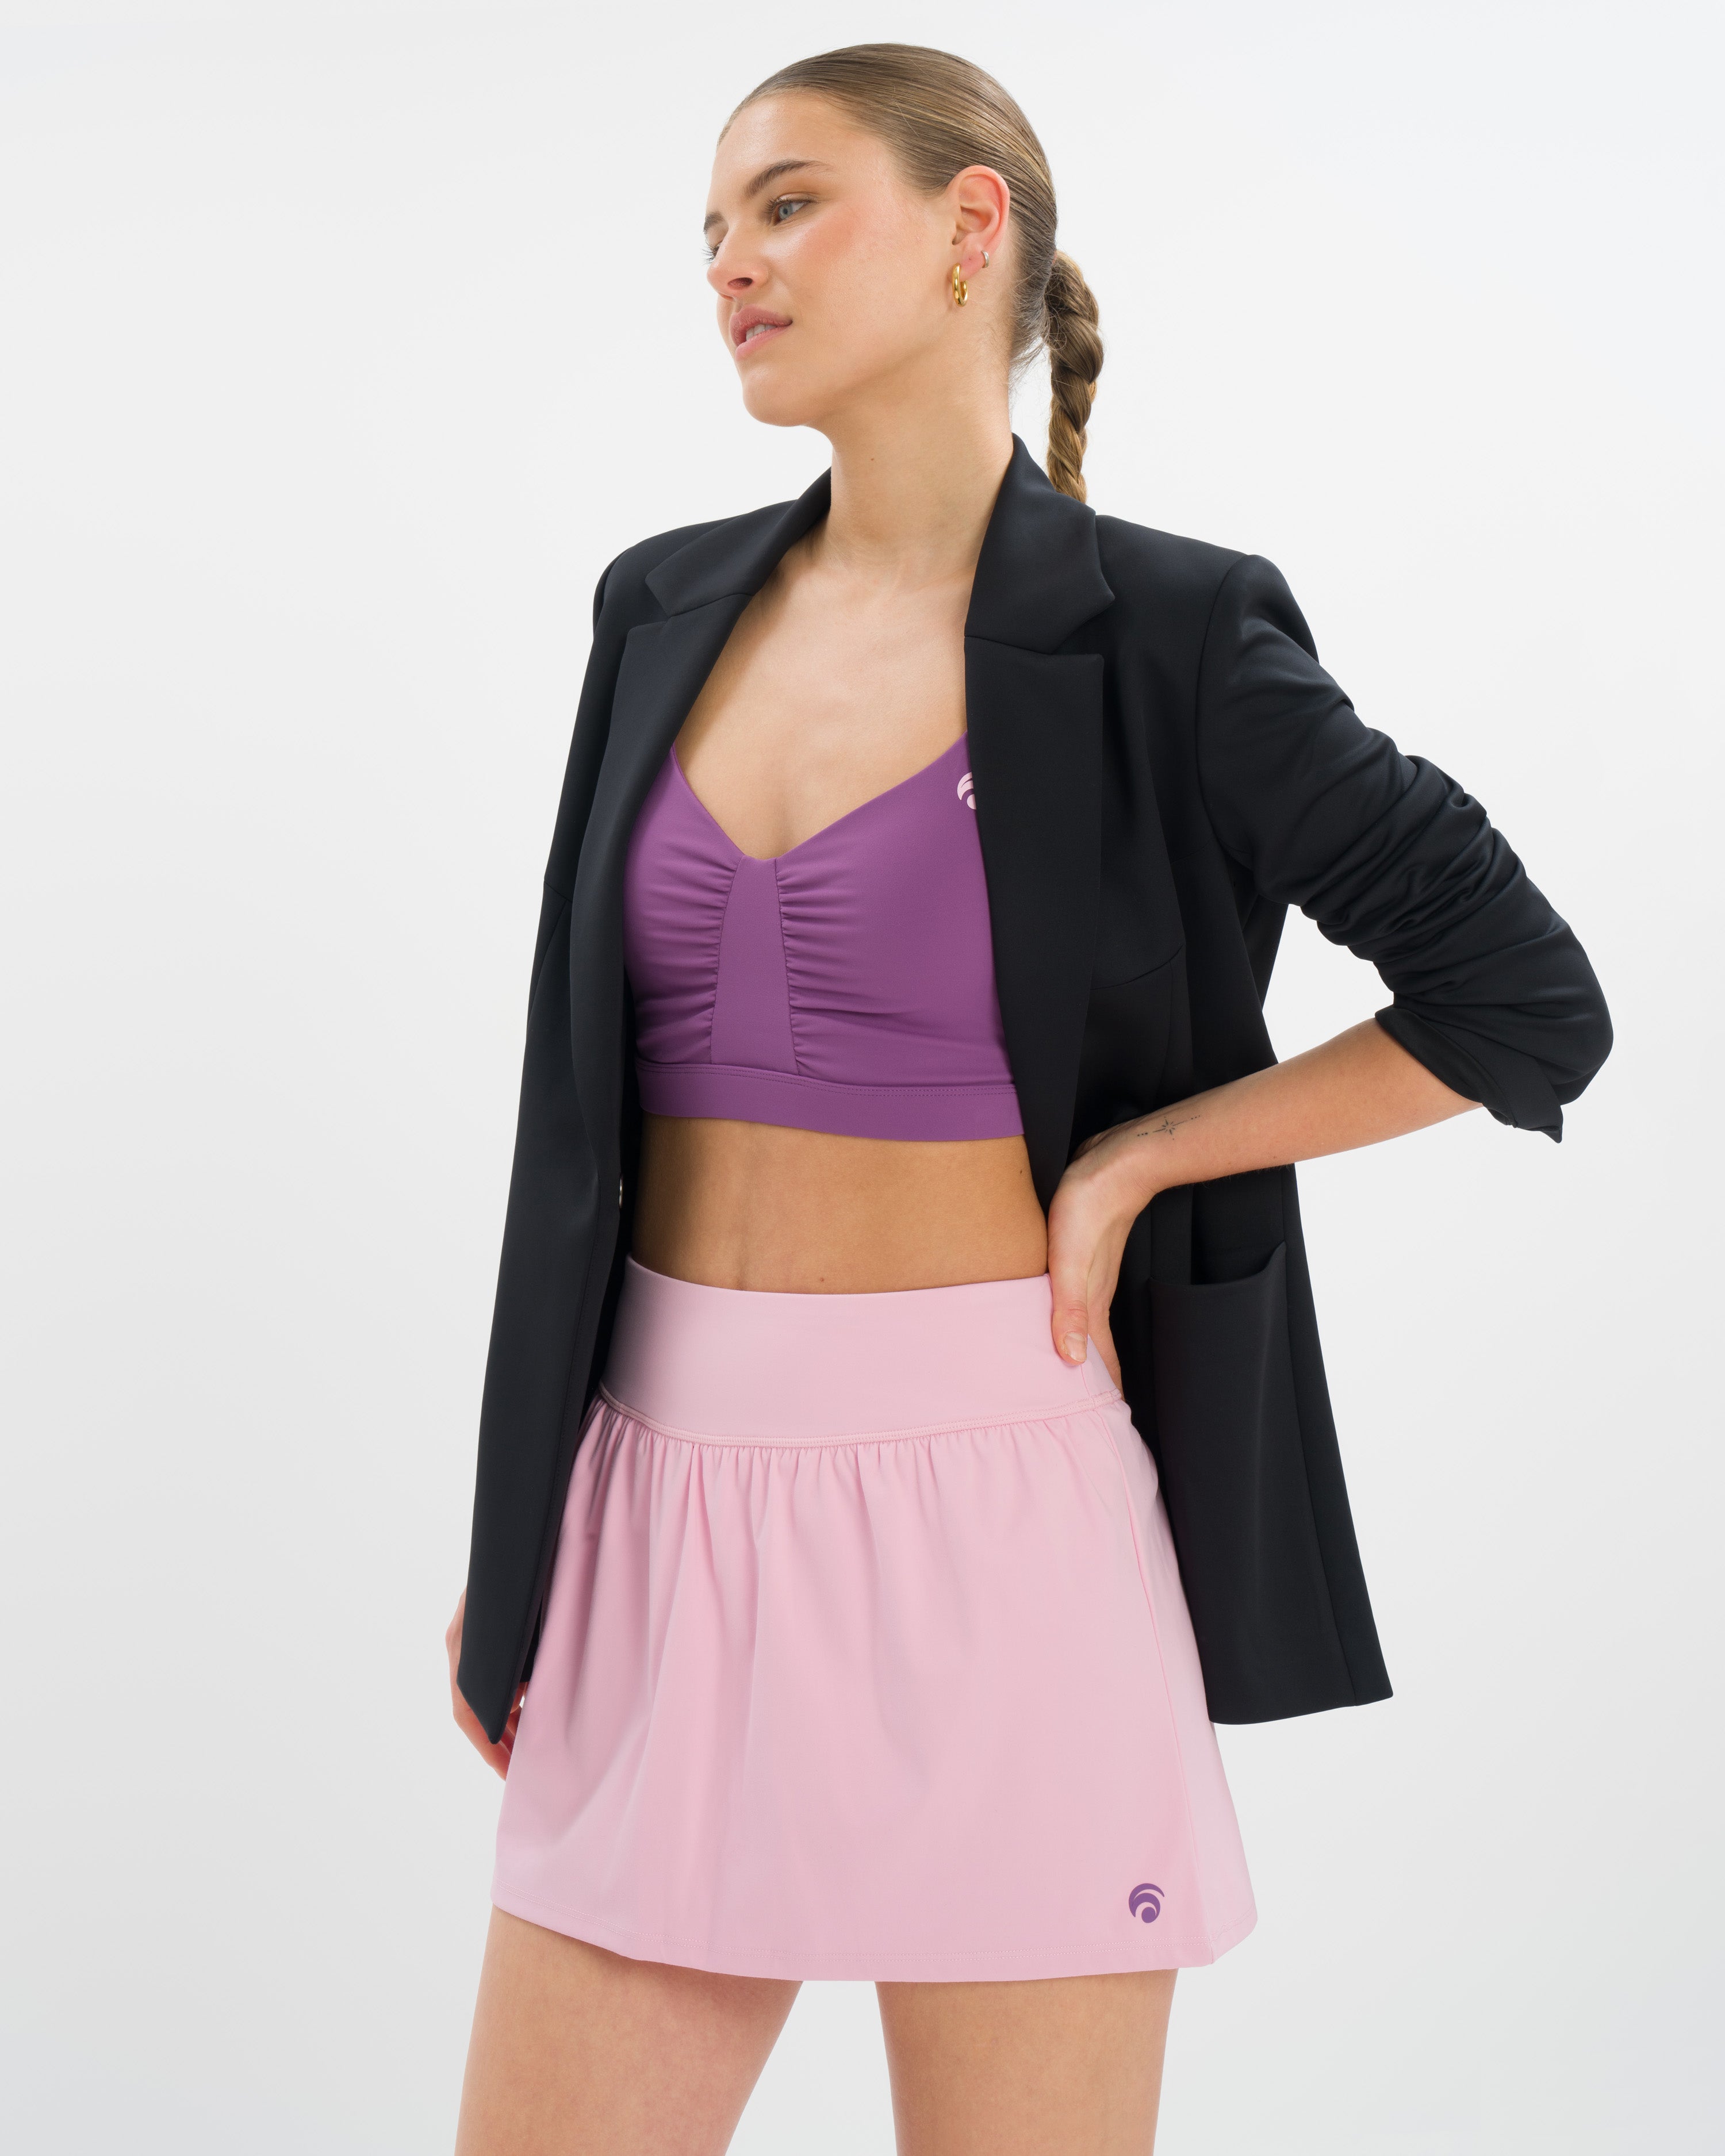 Marina Skirt Blazer Set Deluxe - Black, Melrose & Vermont Purple